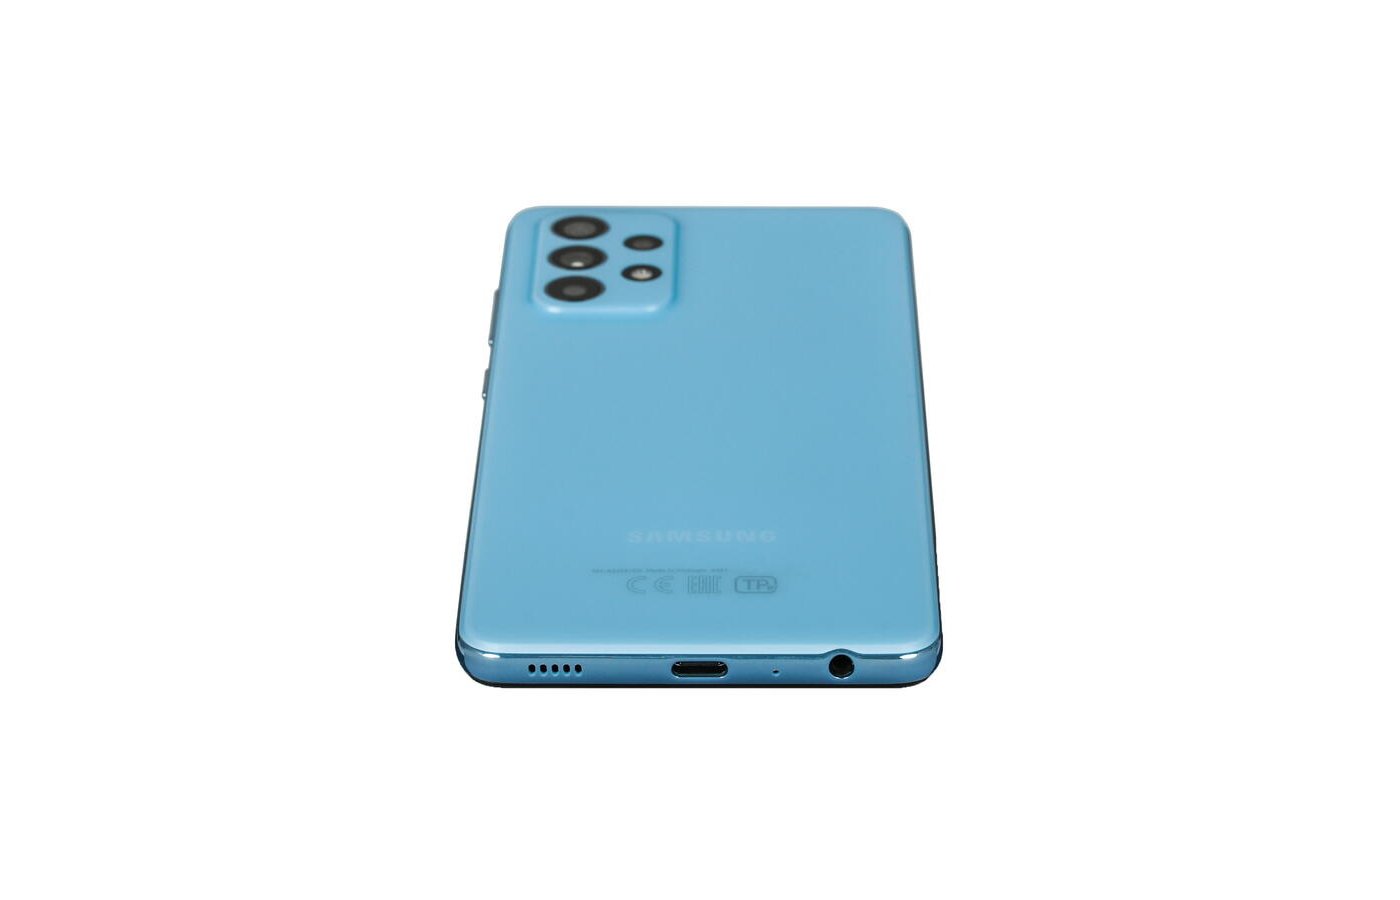 Samsung Galaxy A32 128gb Голубой Купить